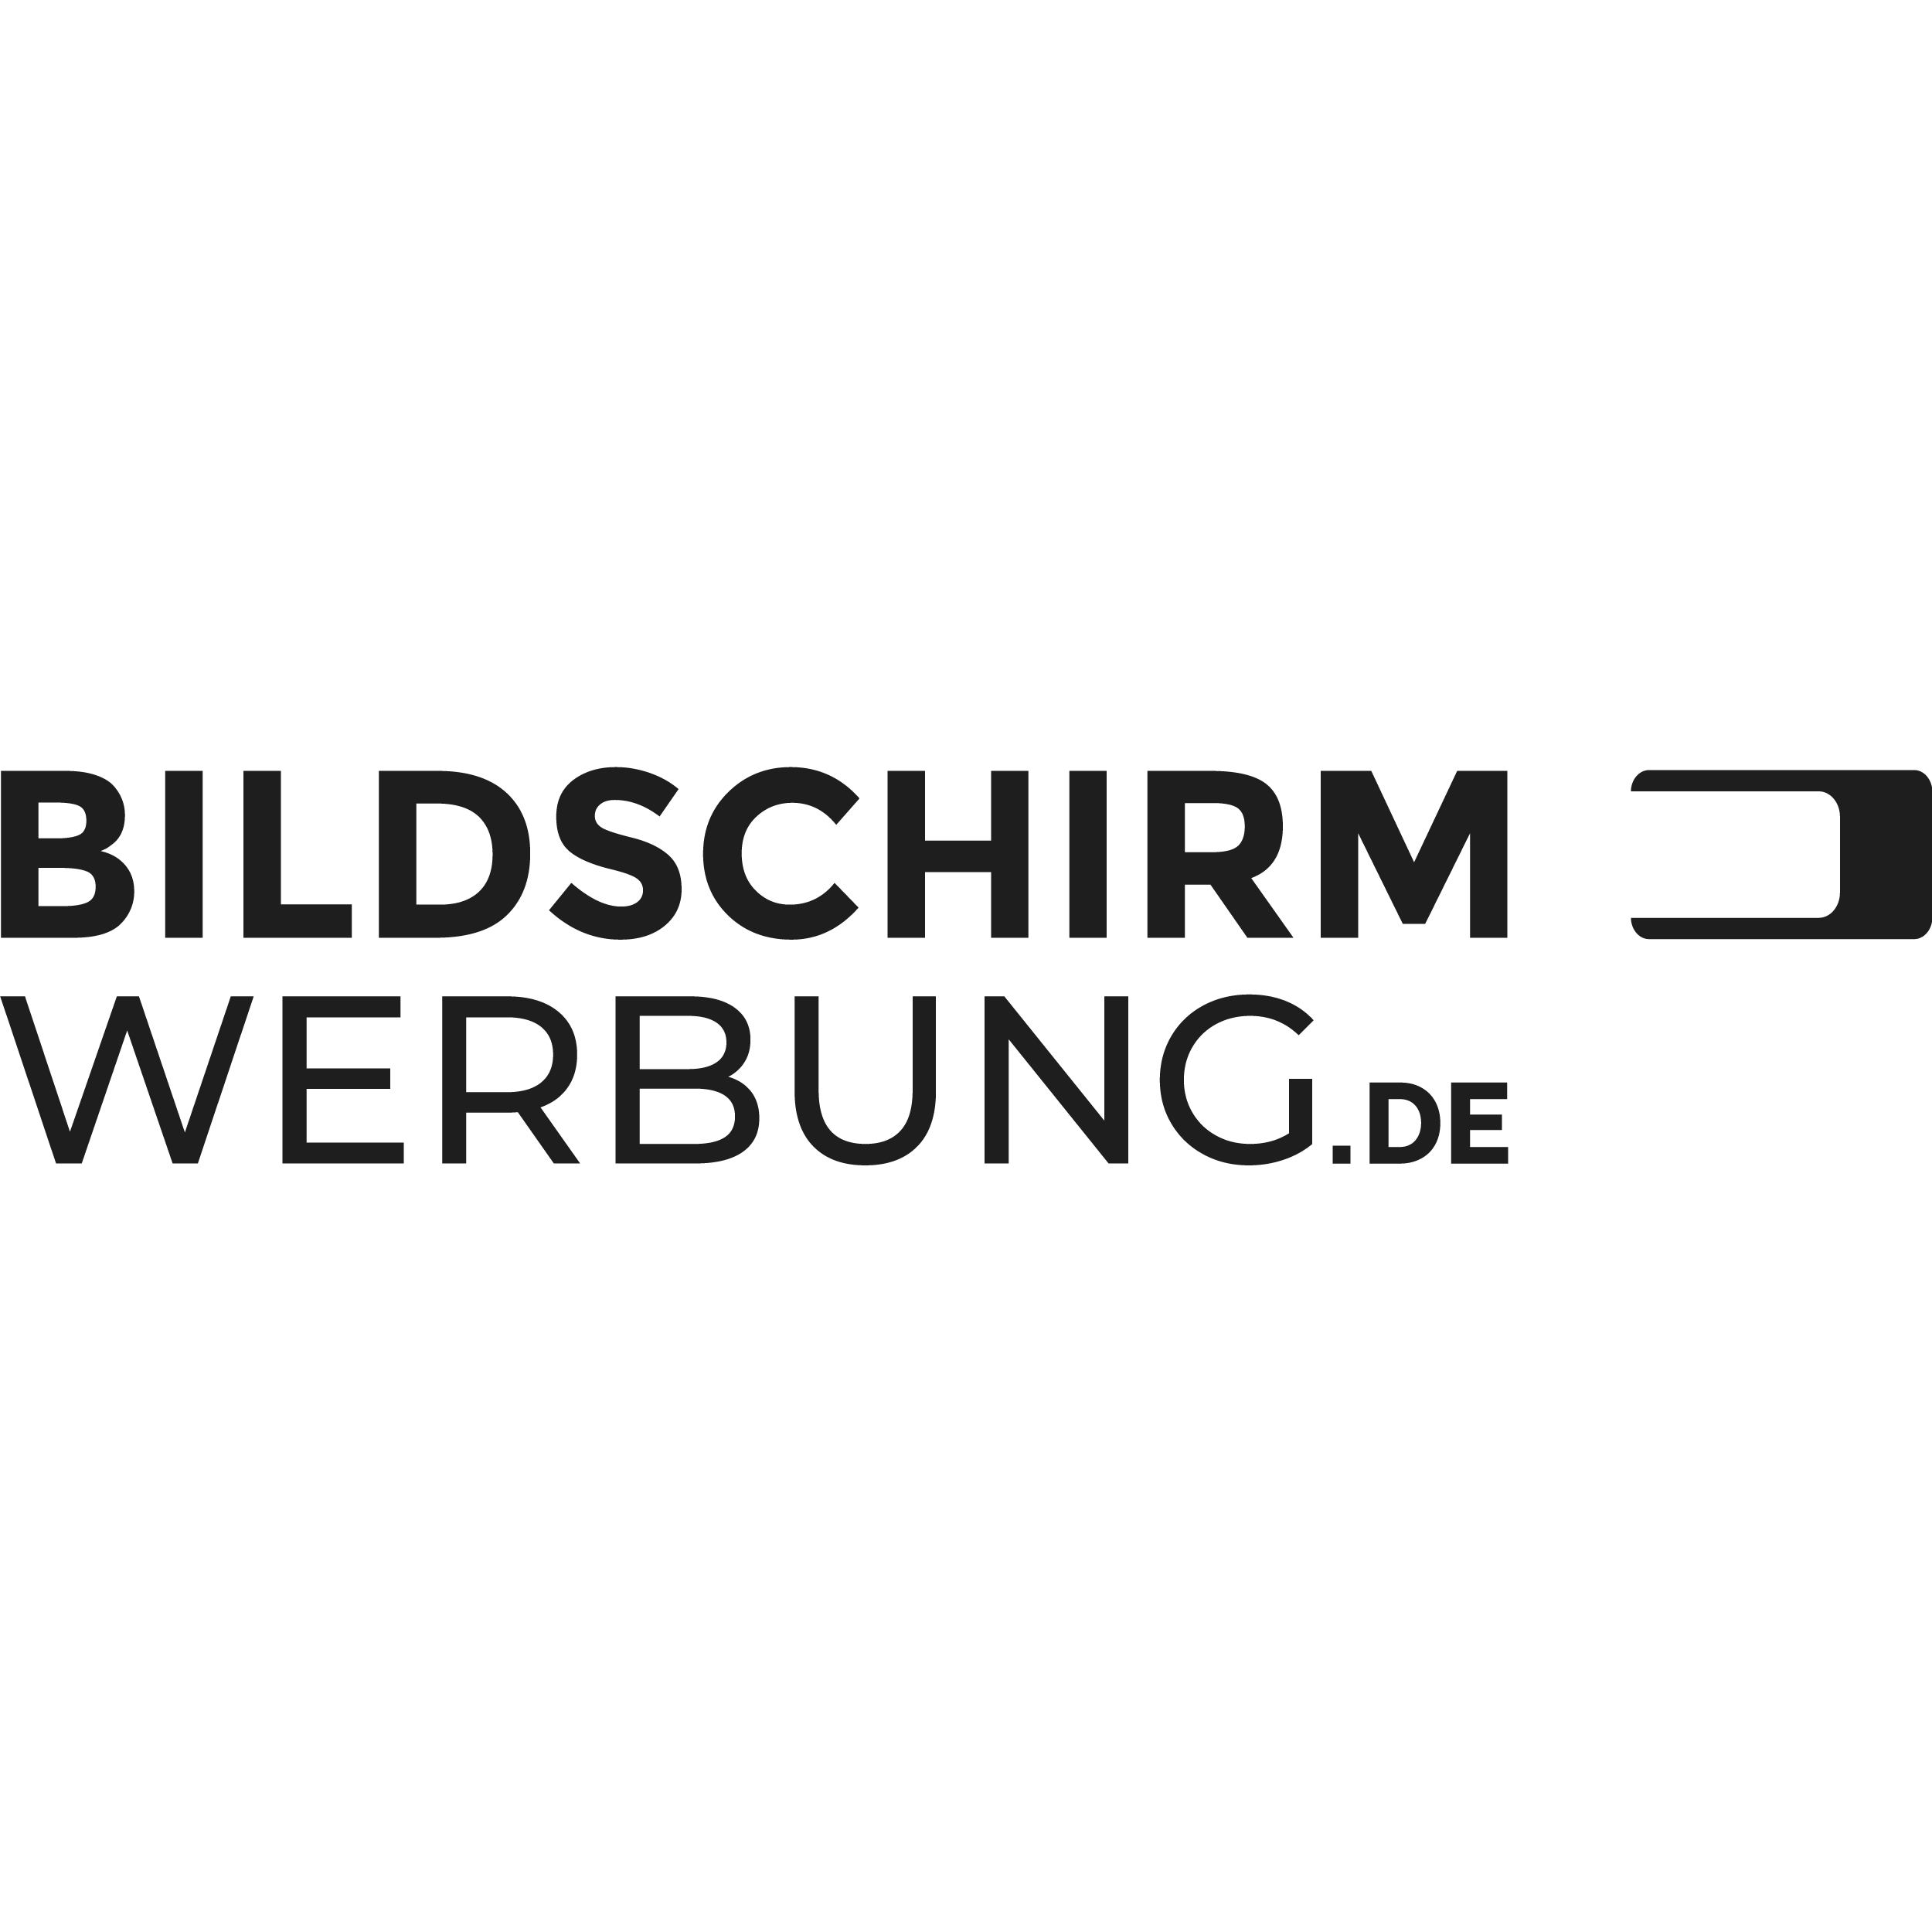 Bildschirmwerbung.de in Bayreuth - Logo